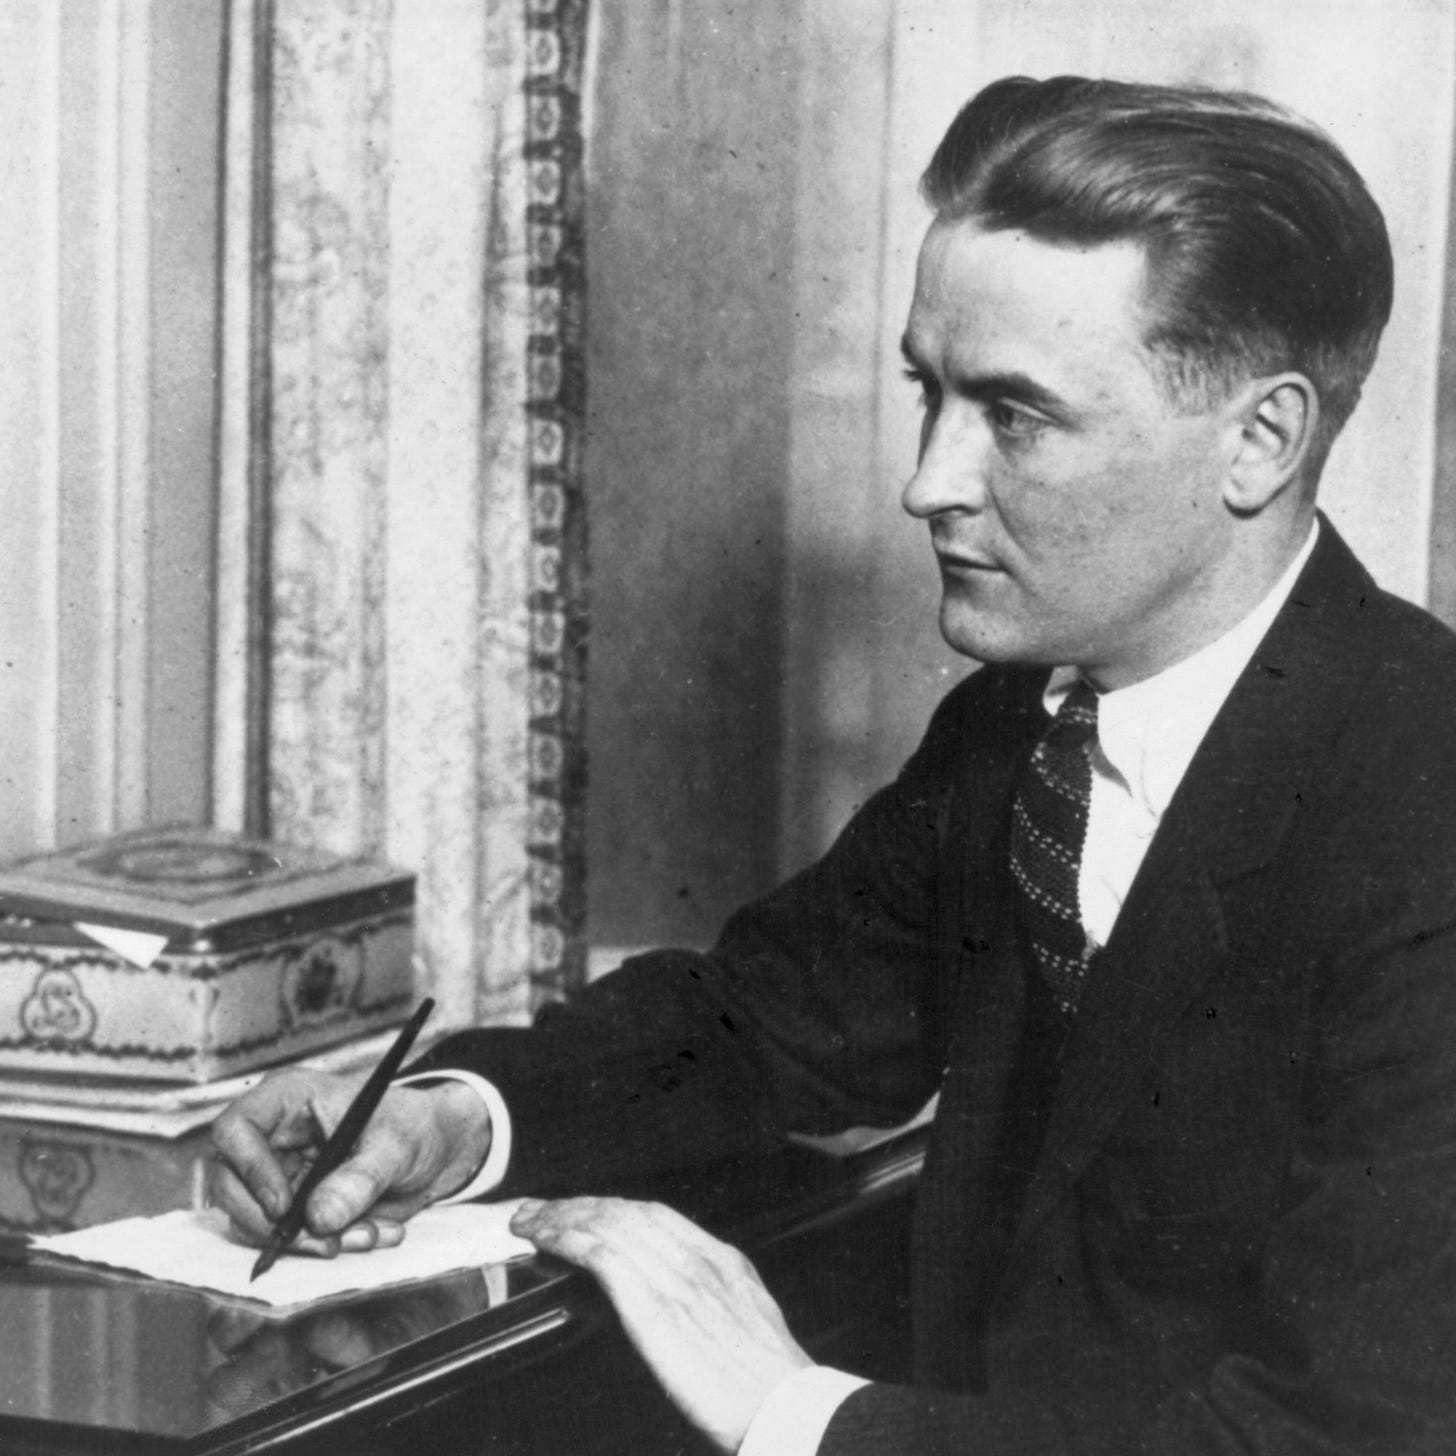 Biography of F. Scott Fitzgerald